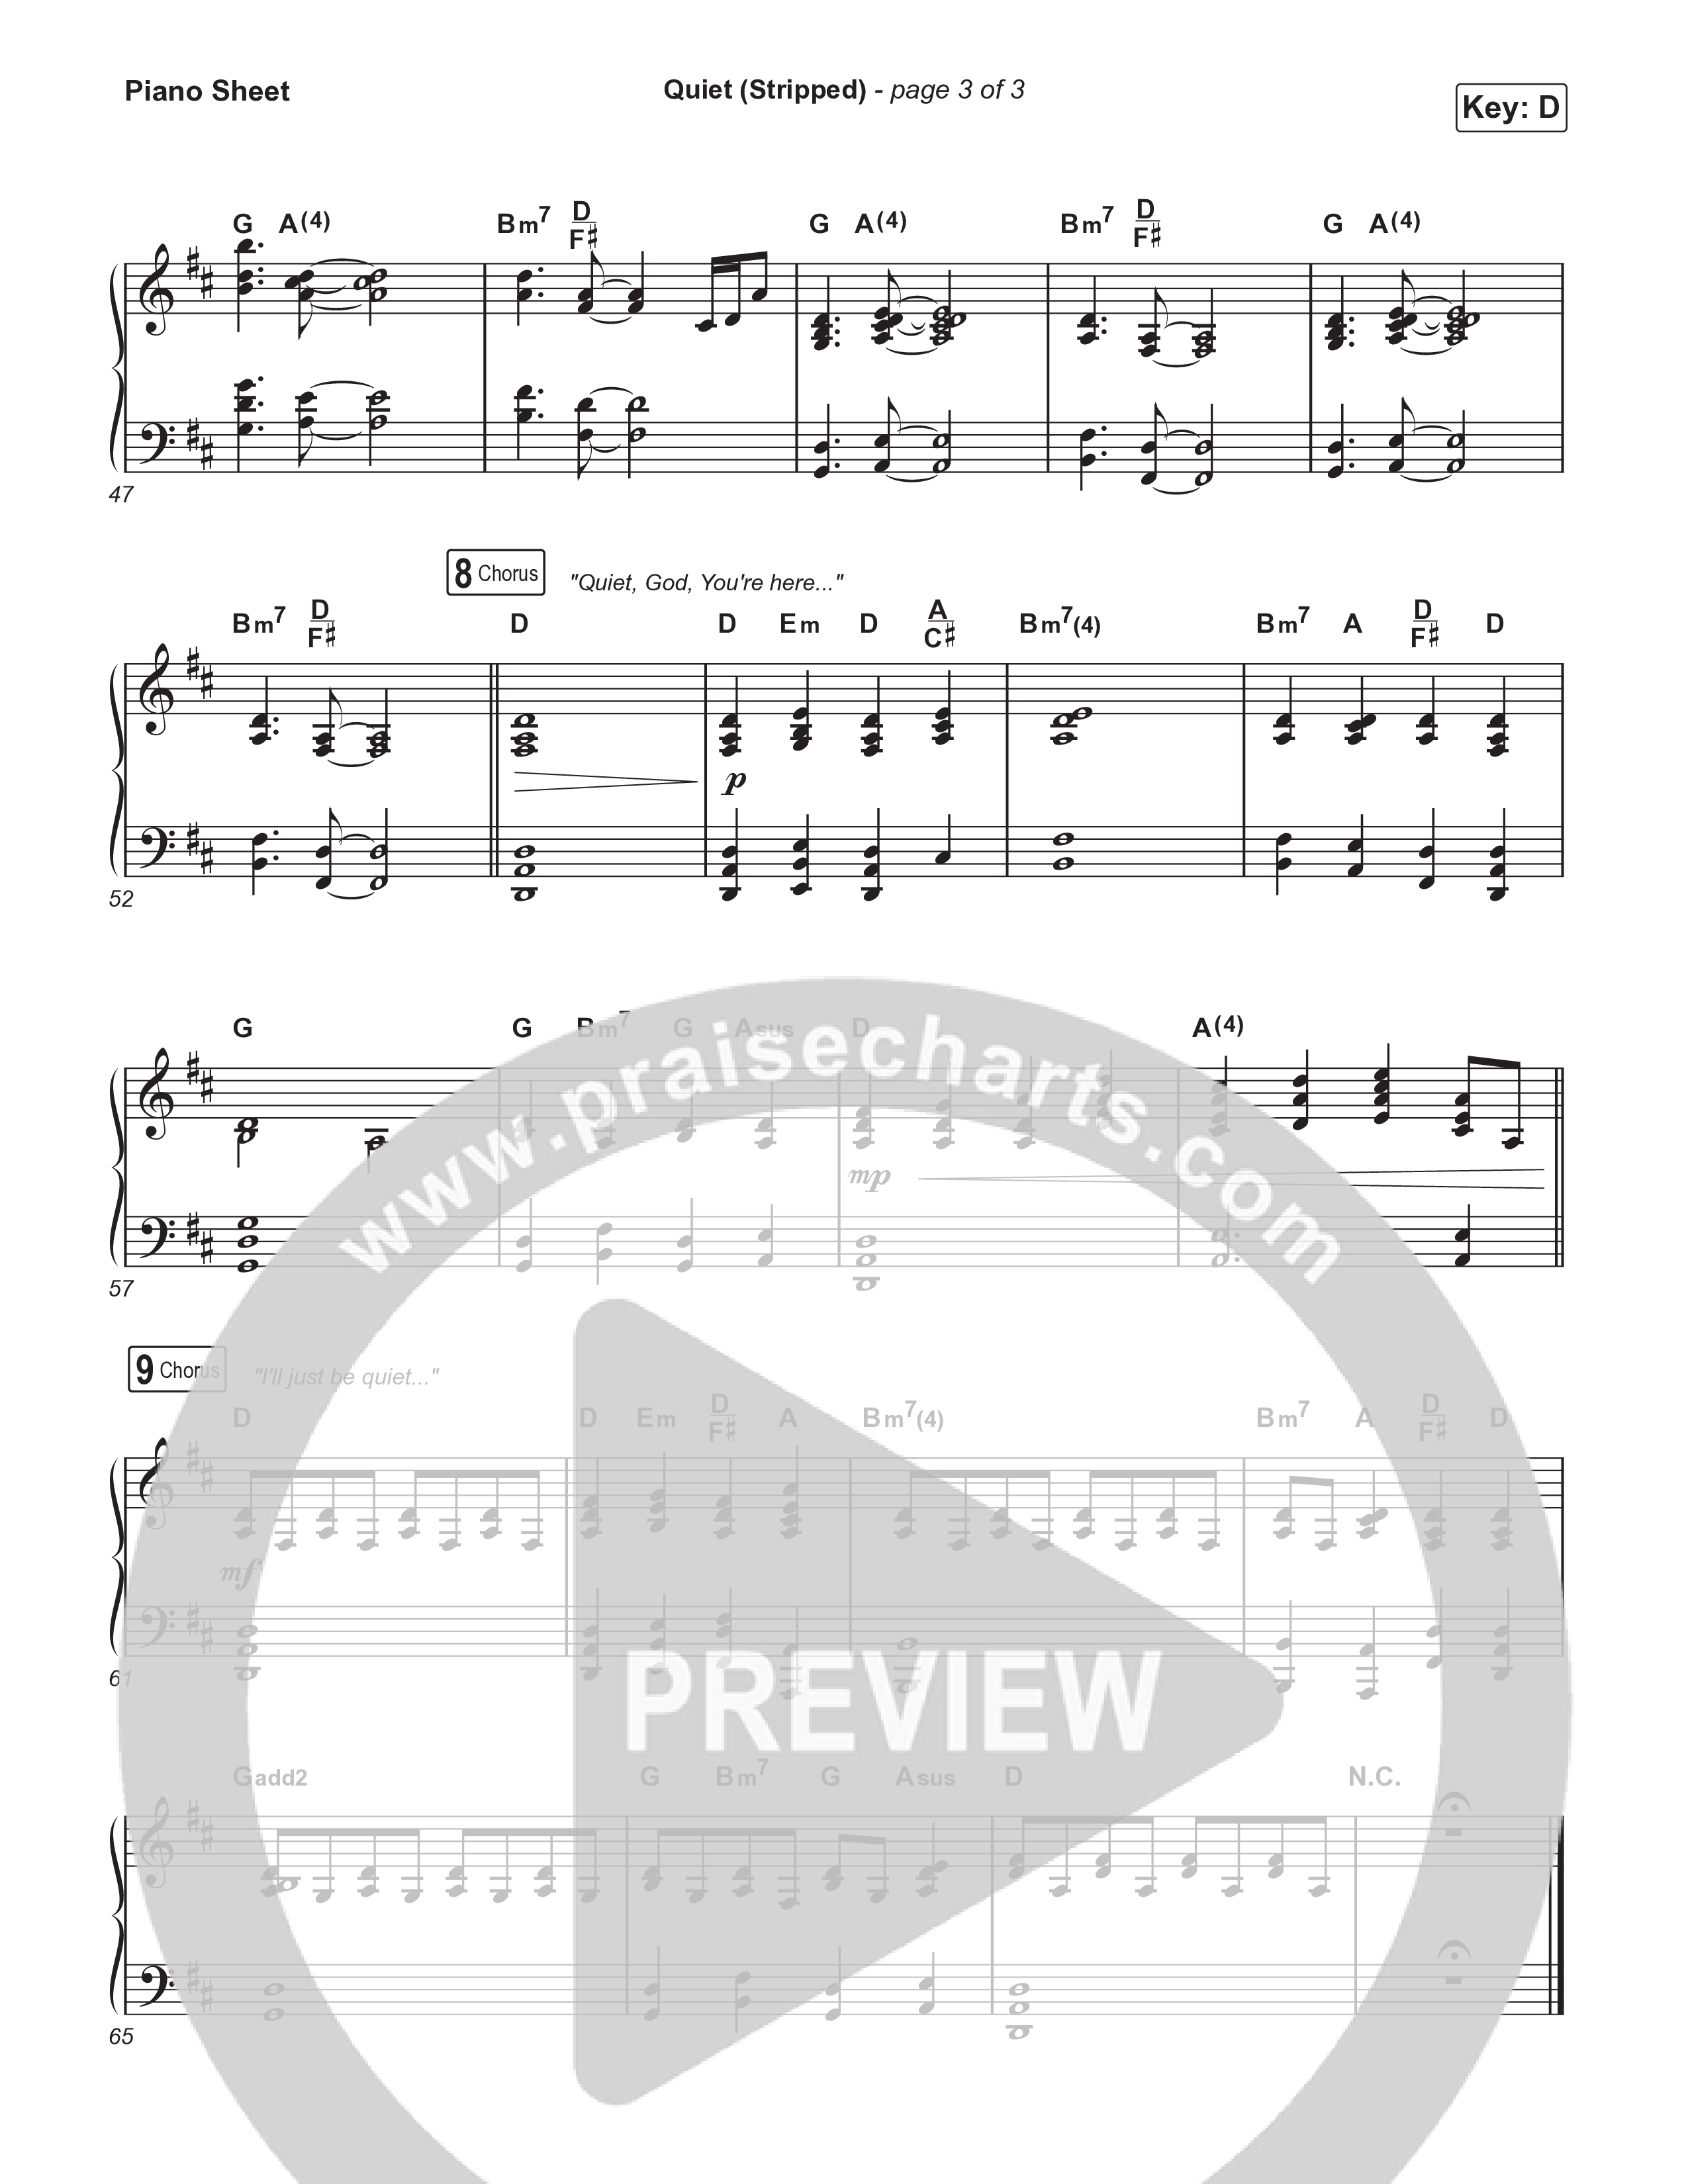 Quiet (Stripped) Piano Sheet (Elevation Worship / ELEVATION RHYTHM)